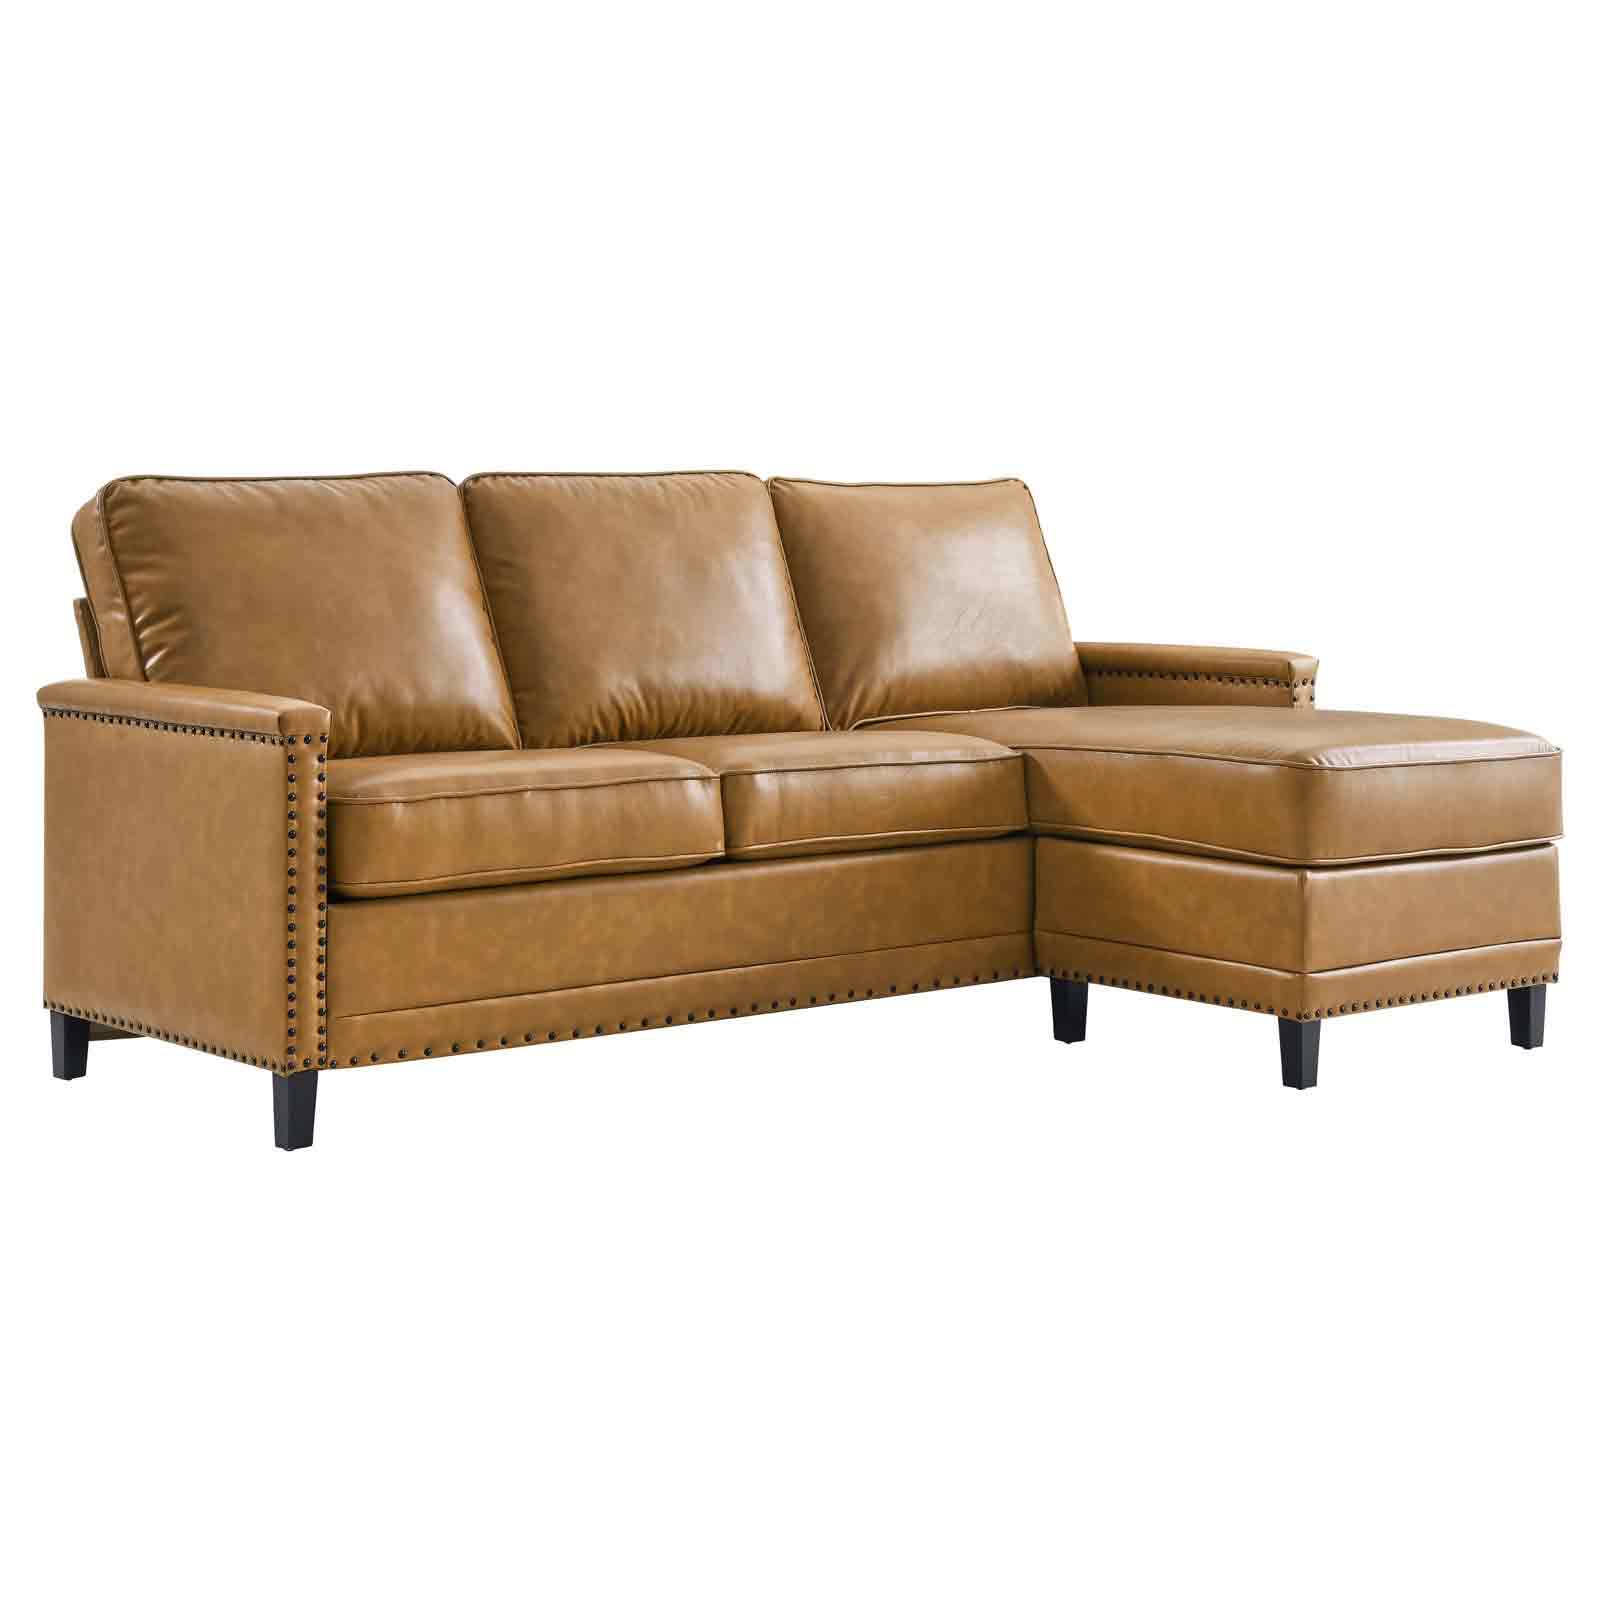 Ashton Vegan Leather Sectional Sofa in Tan